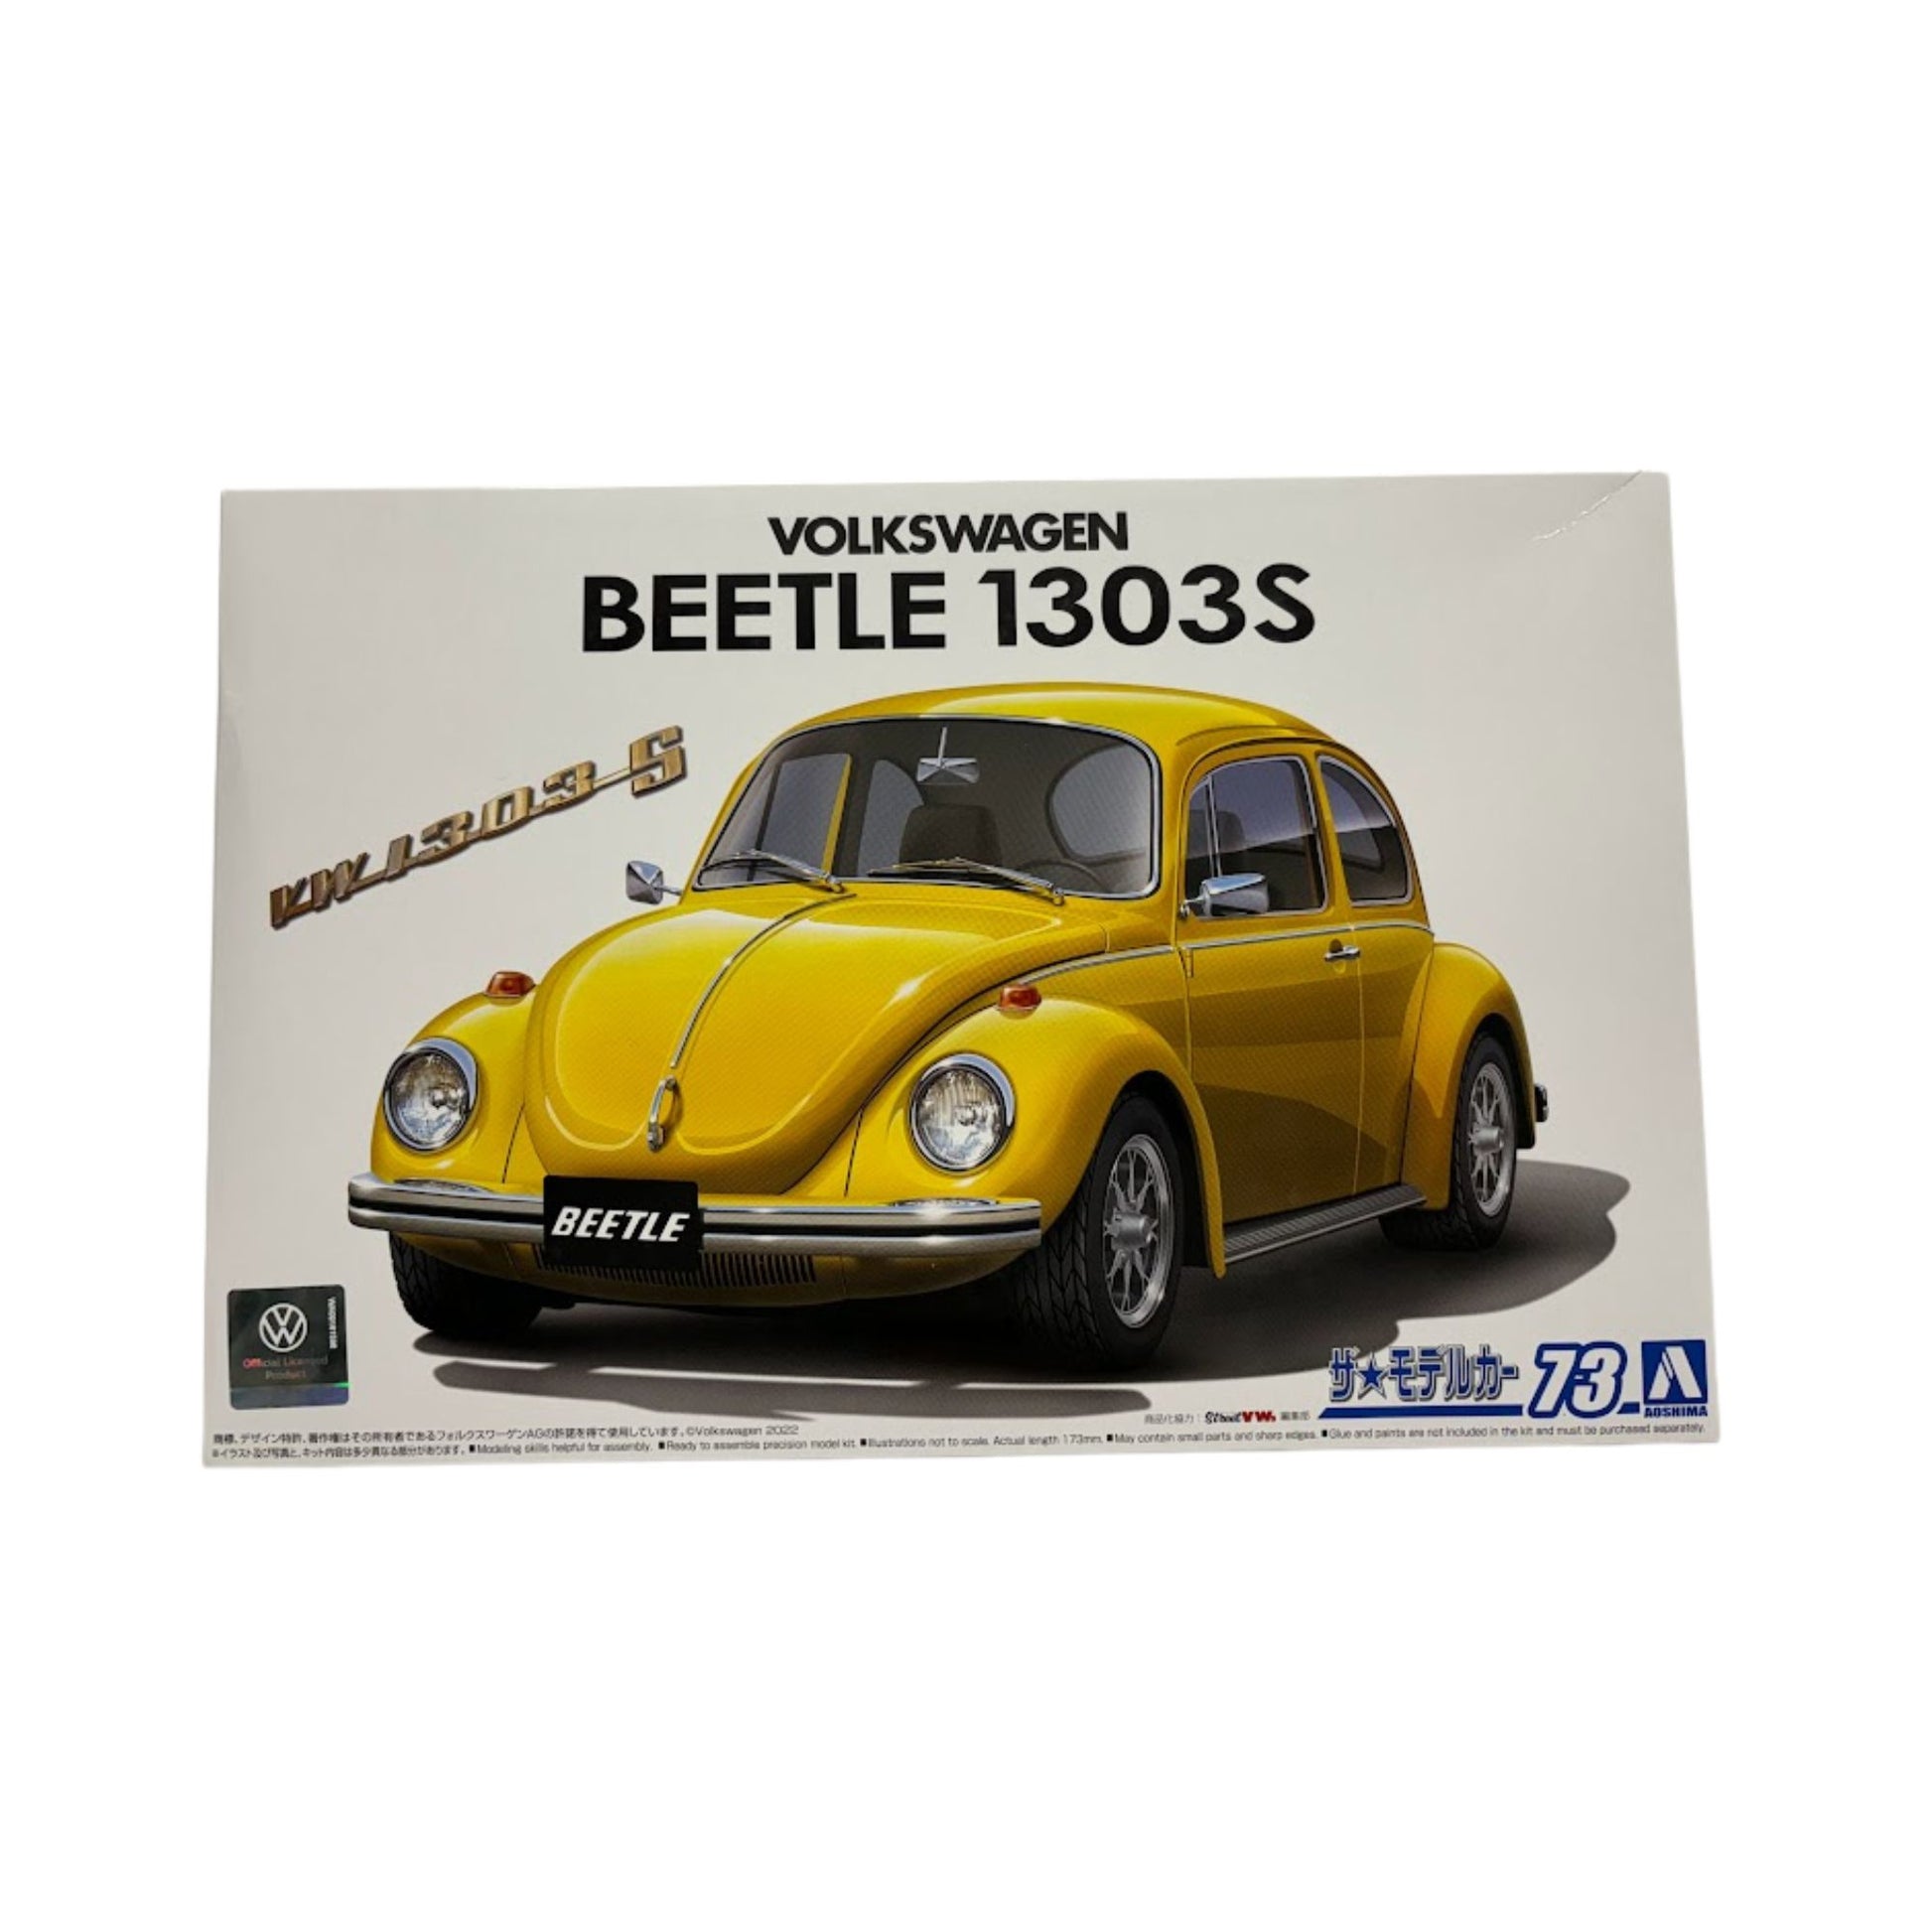 Volkeswagen beetle 1303S model car kit